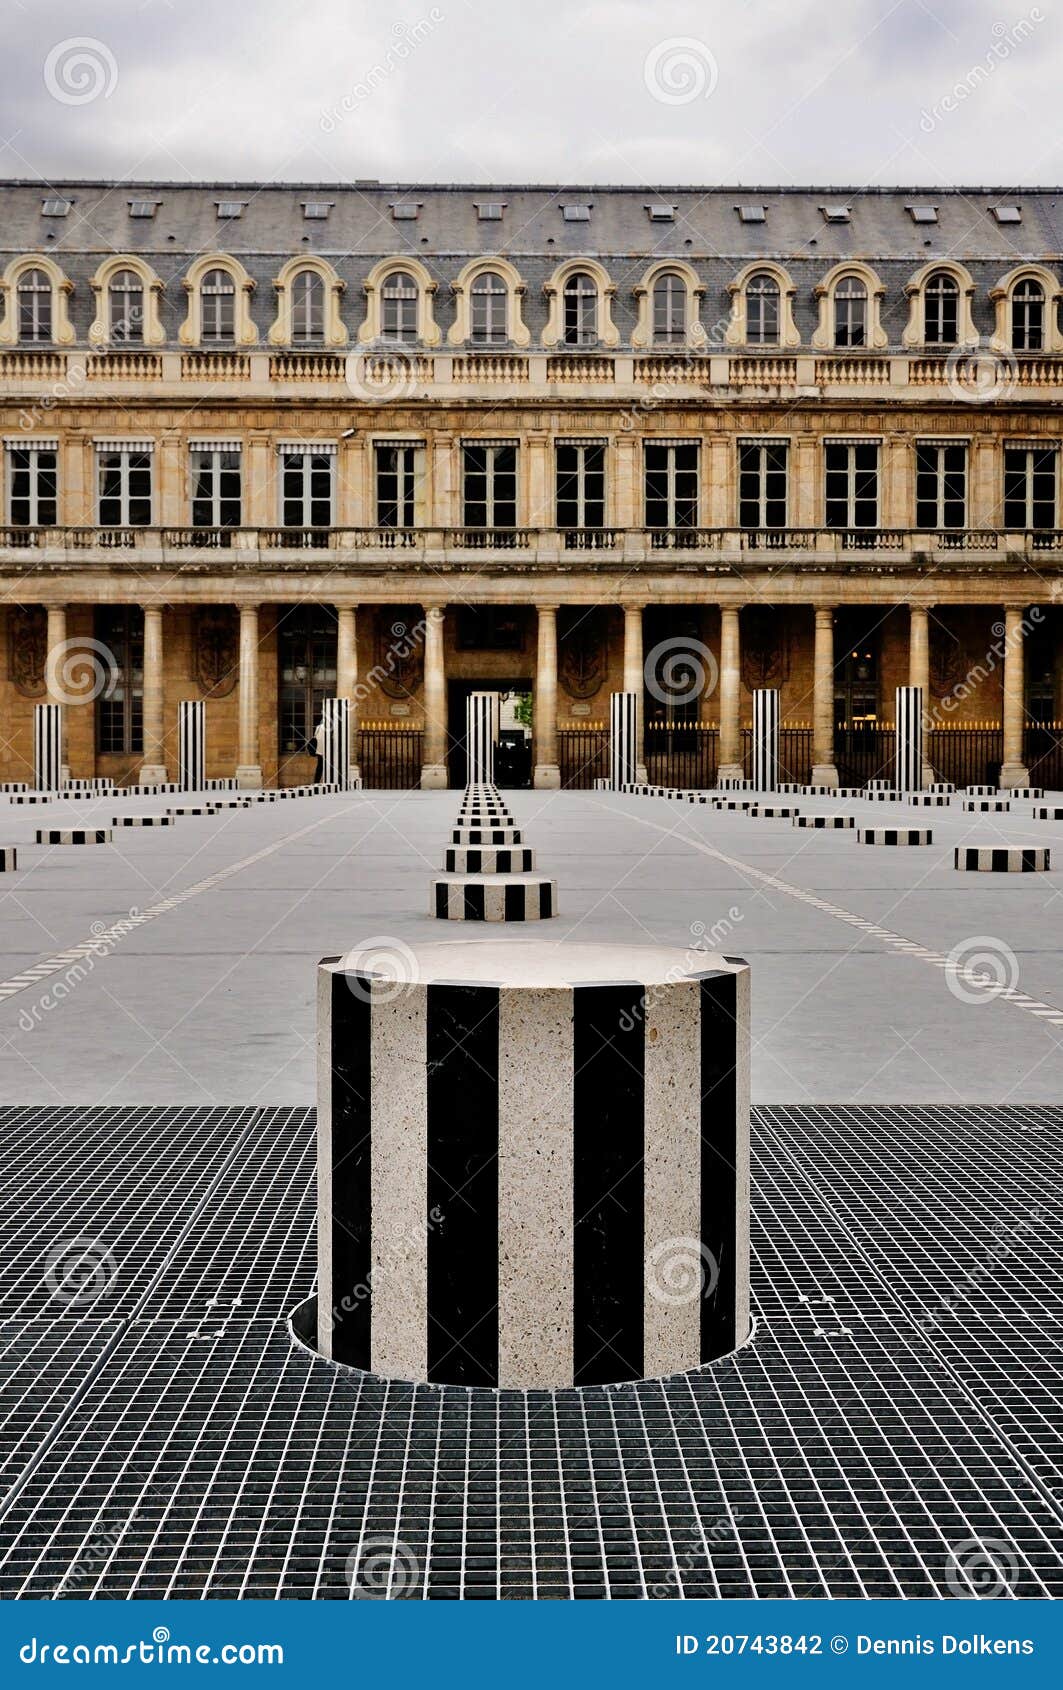 courtyard of palais royale, paris